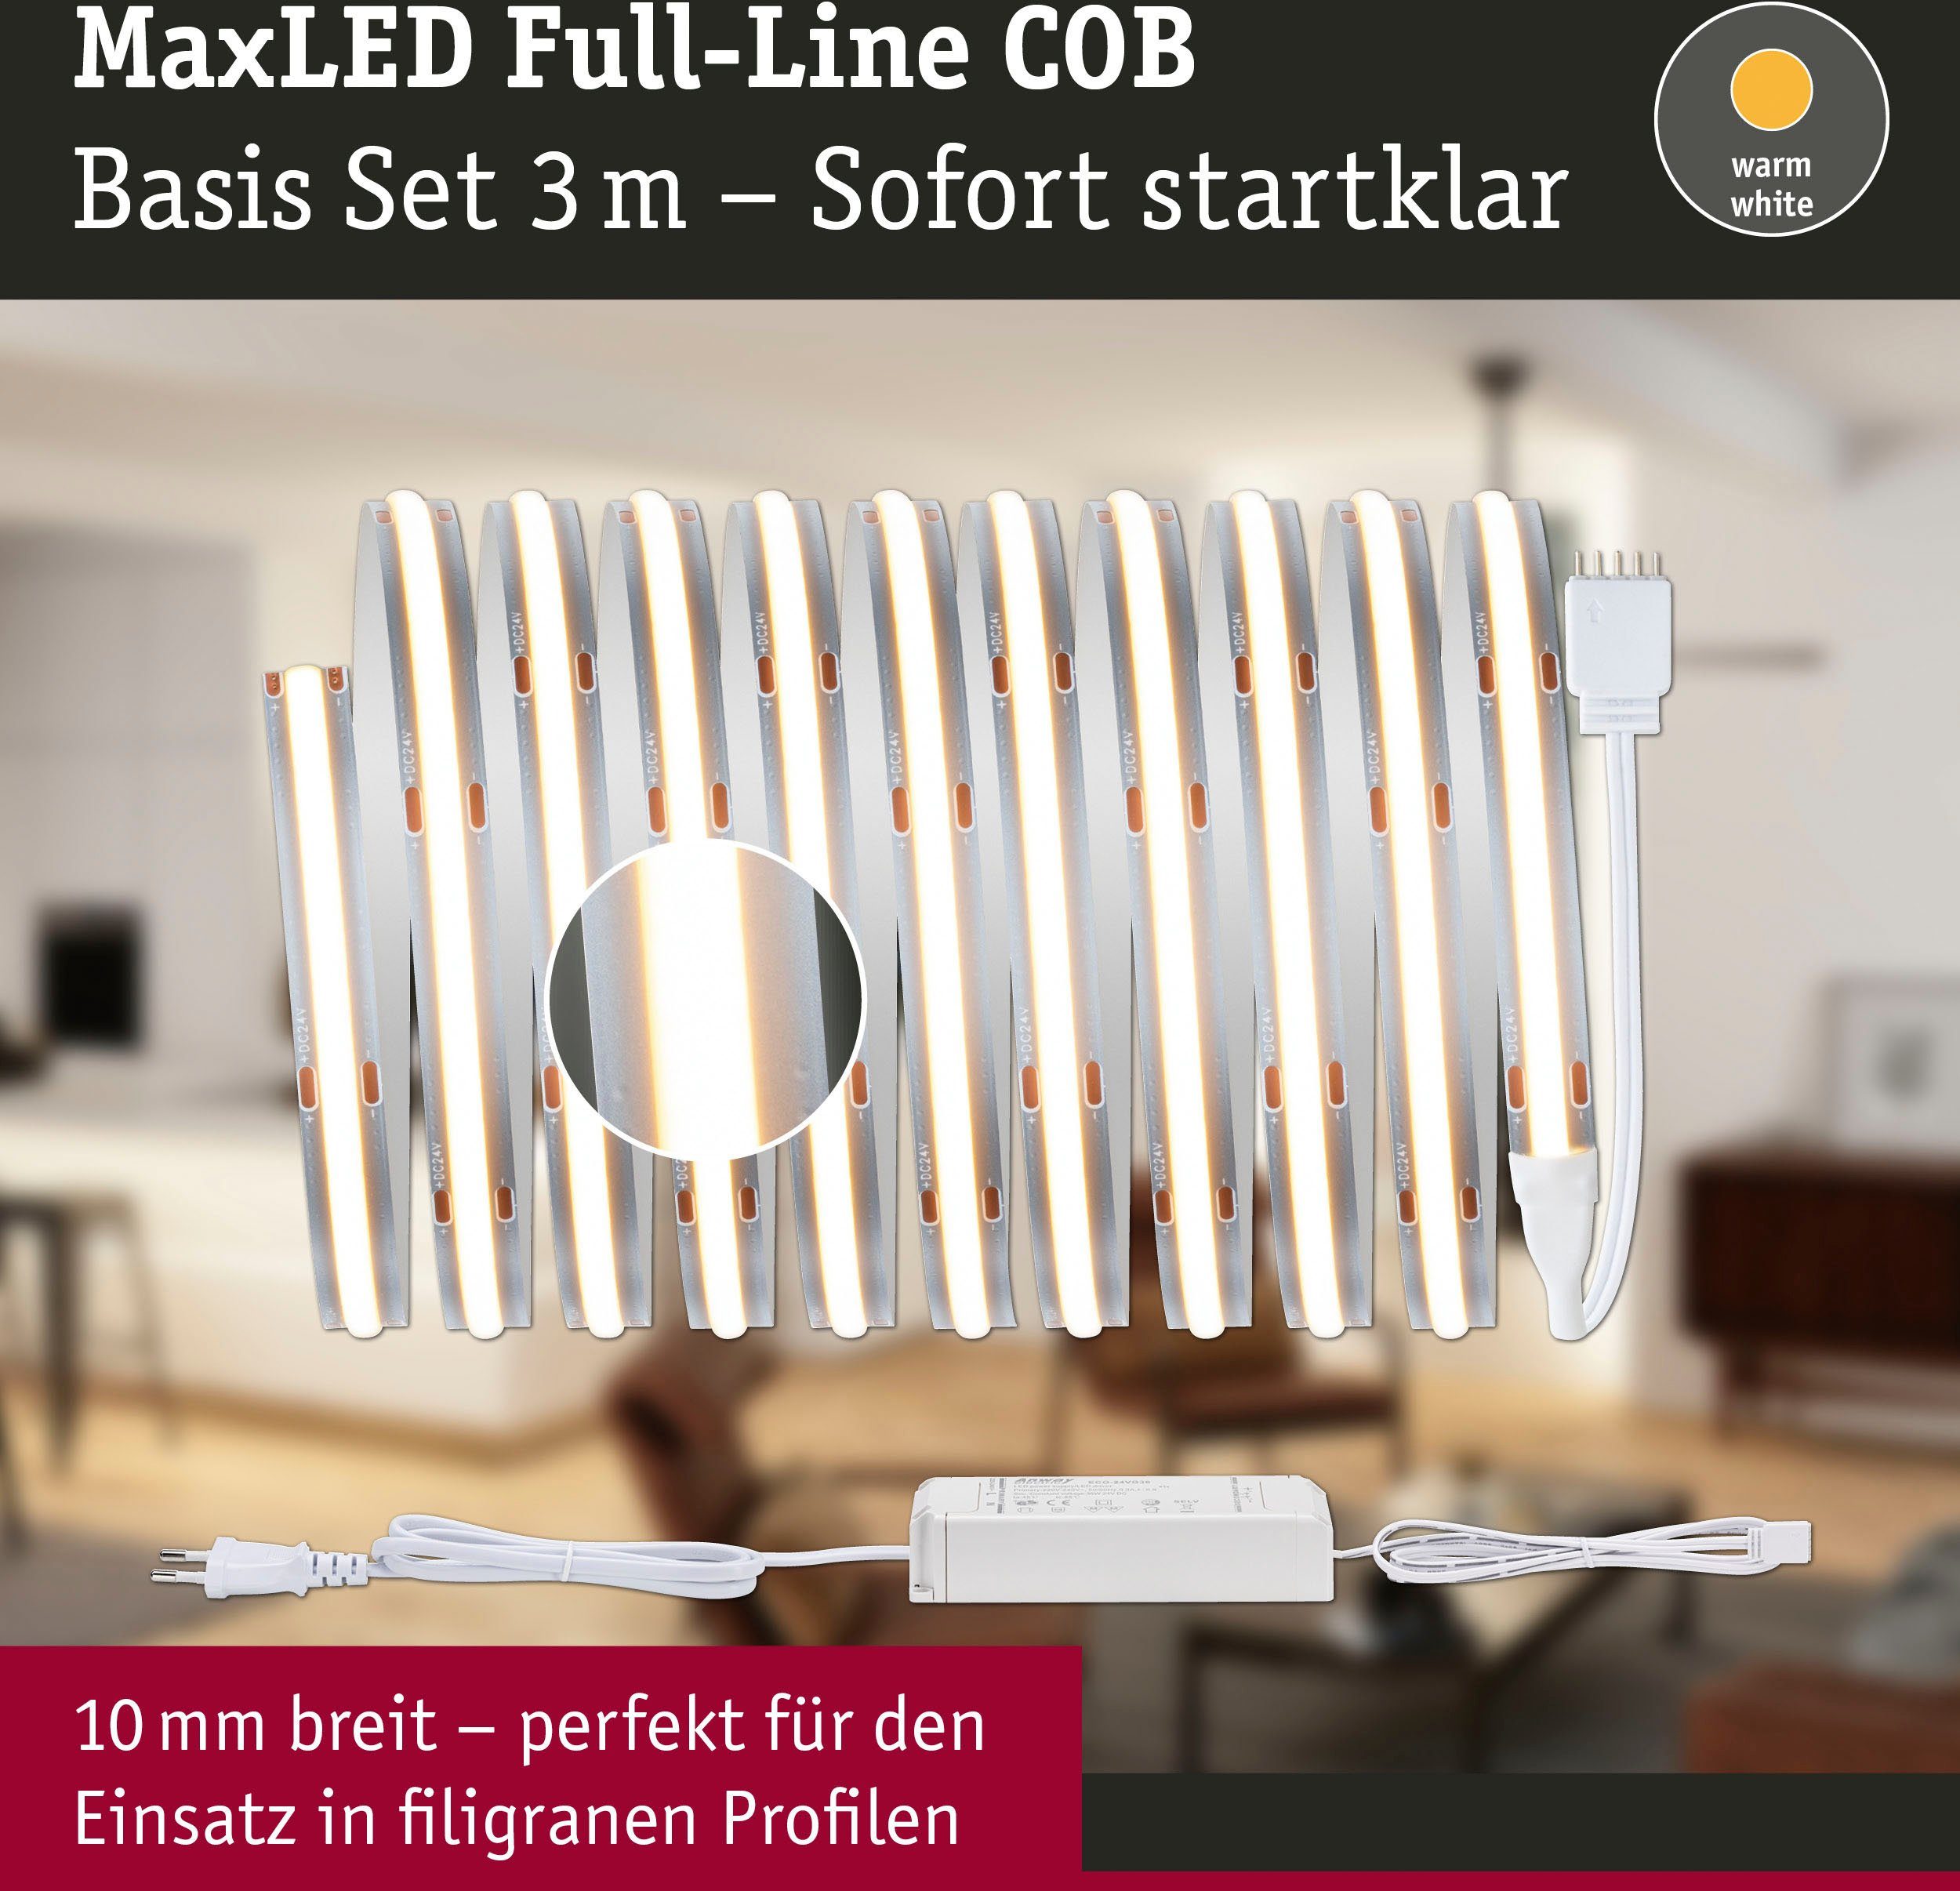 1-flammig, 1500lm Paulmann Basisset 2700K, 500 19W 3m Full-Line Warmweiß MaxLED LED-Streifen COB Basisset 480LED